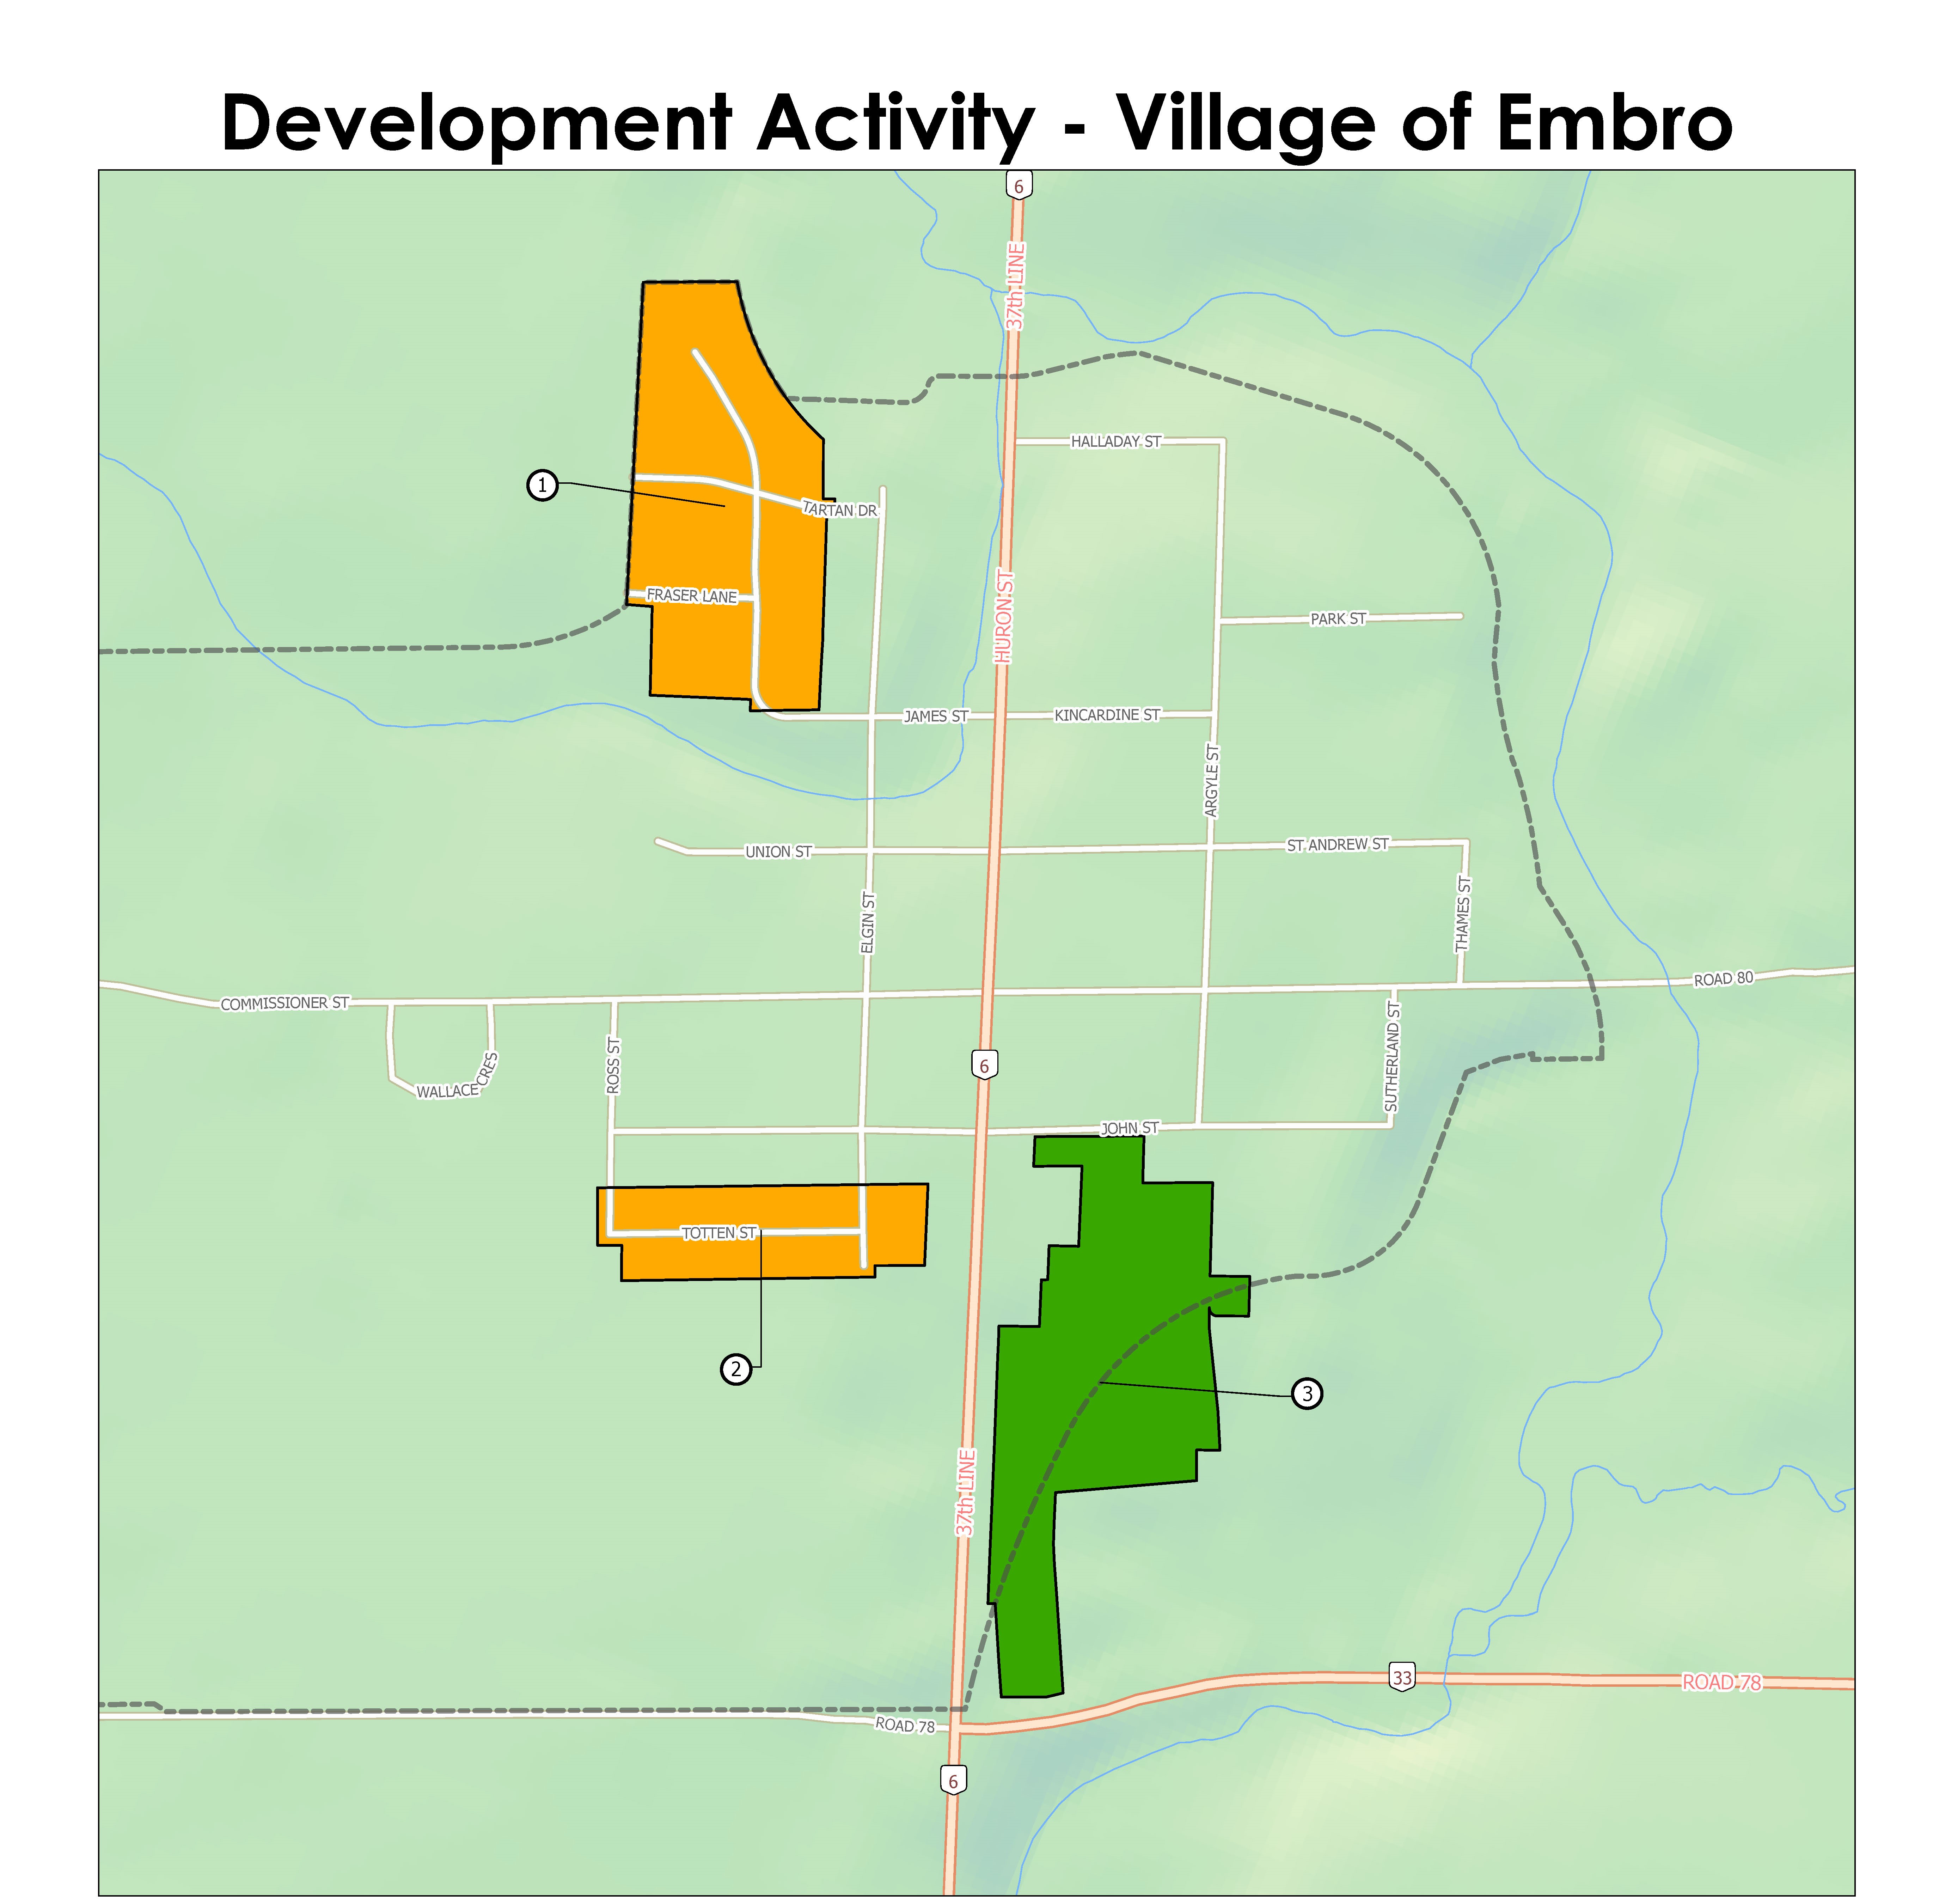 thumbnail of Embro Dev activity map